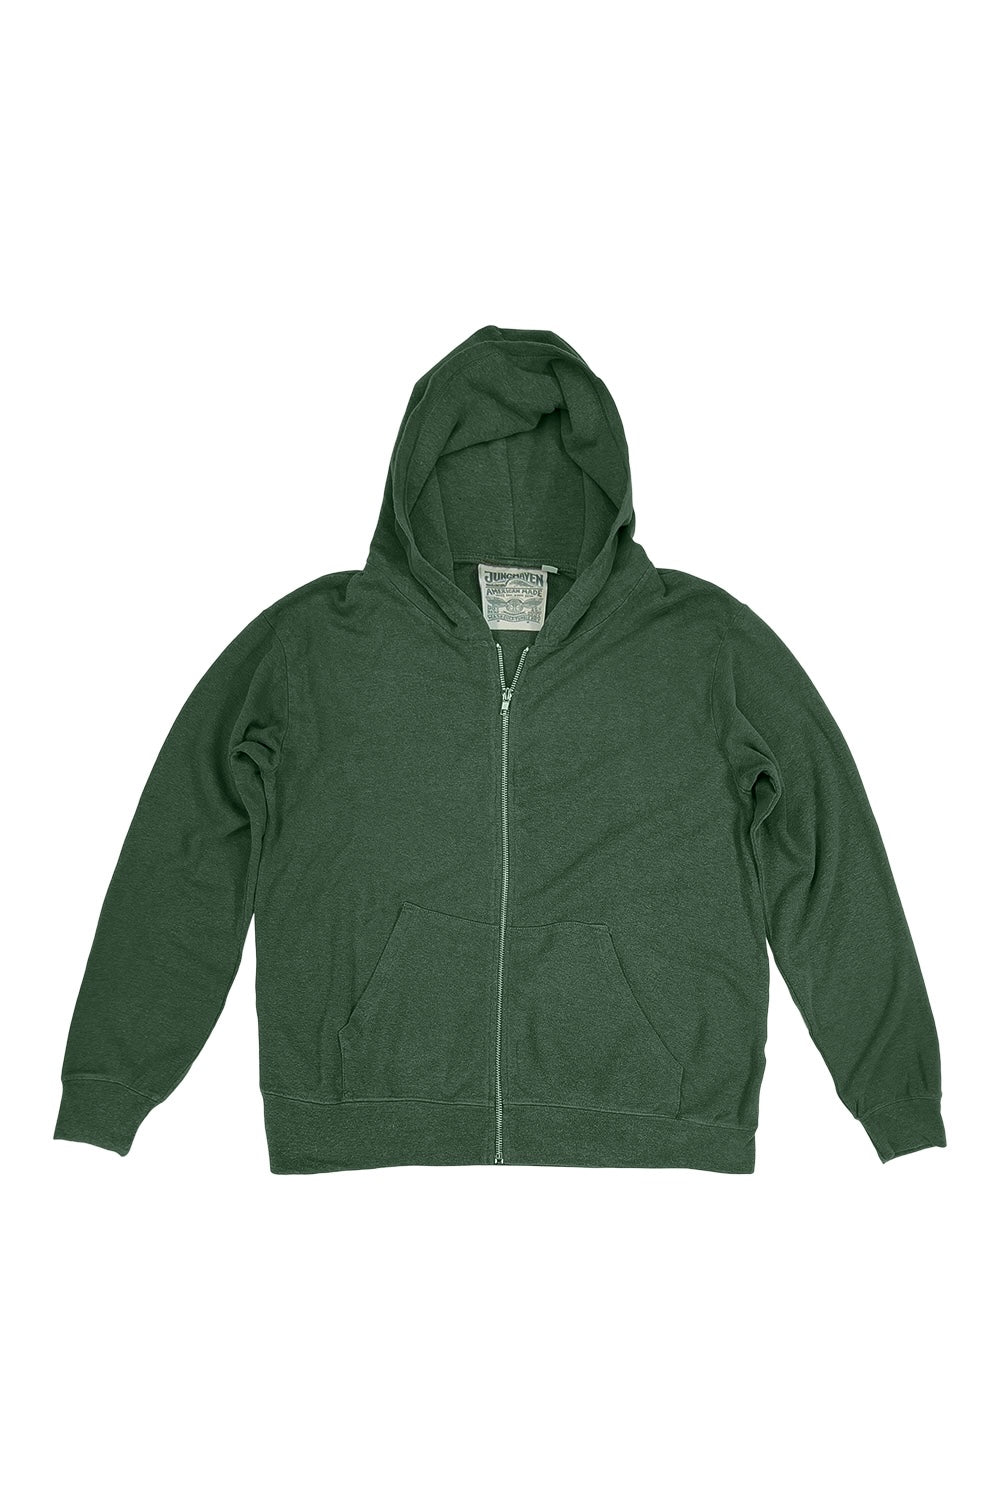 Newport Sweatshirt | Jungmaven Hemp Clothing & Accessories / Color: Hunter Green